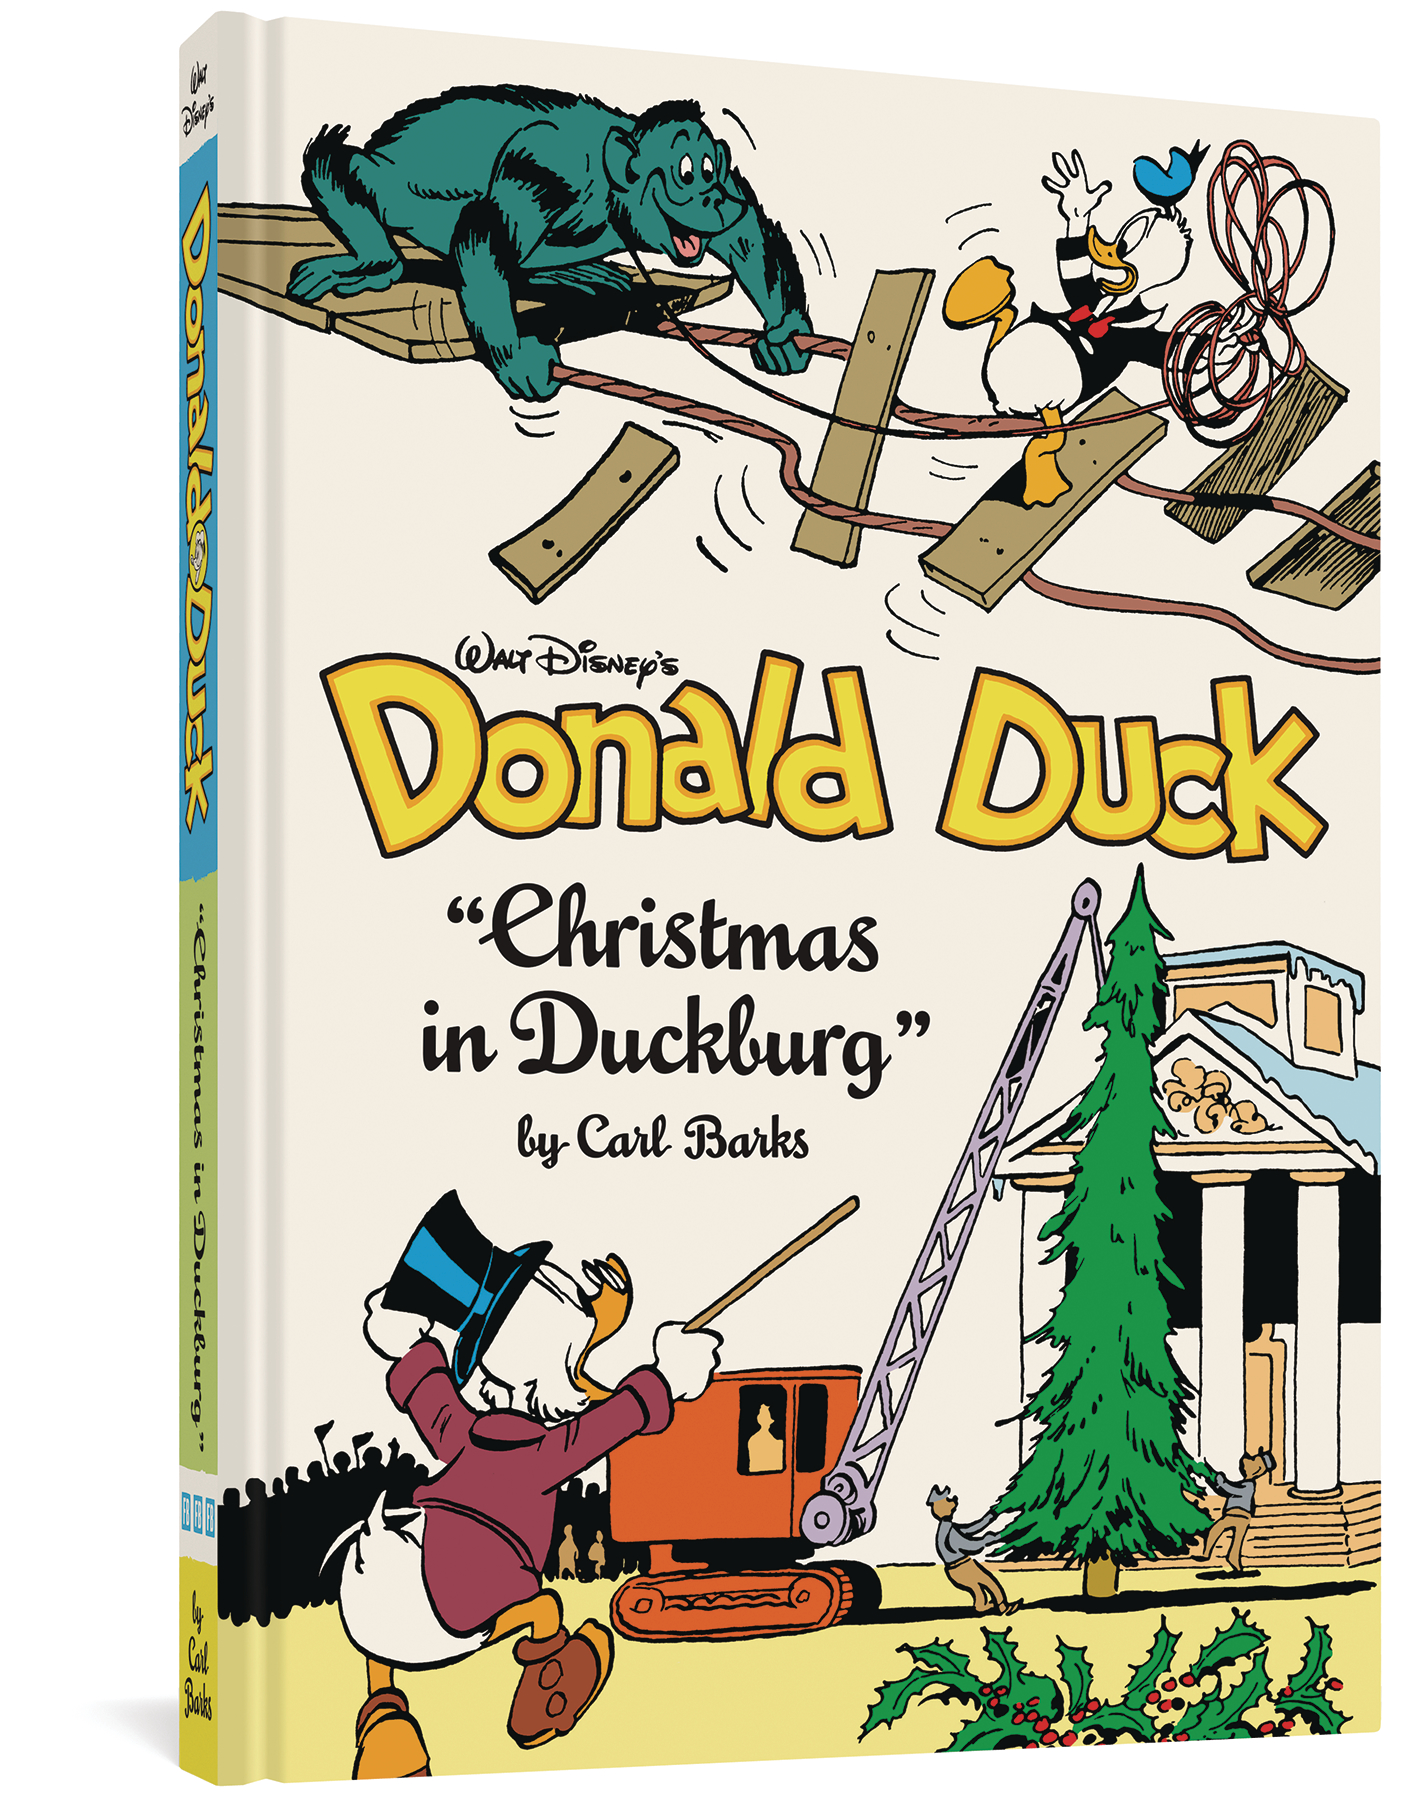 Complete Carl Barks Disney Library Hardcover Volume 21 Walt Disney's Donald Duck Christmas In Duckburg